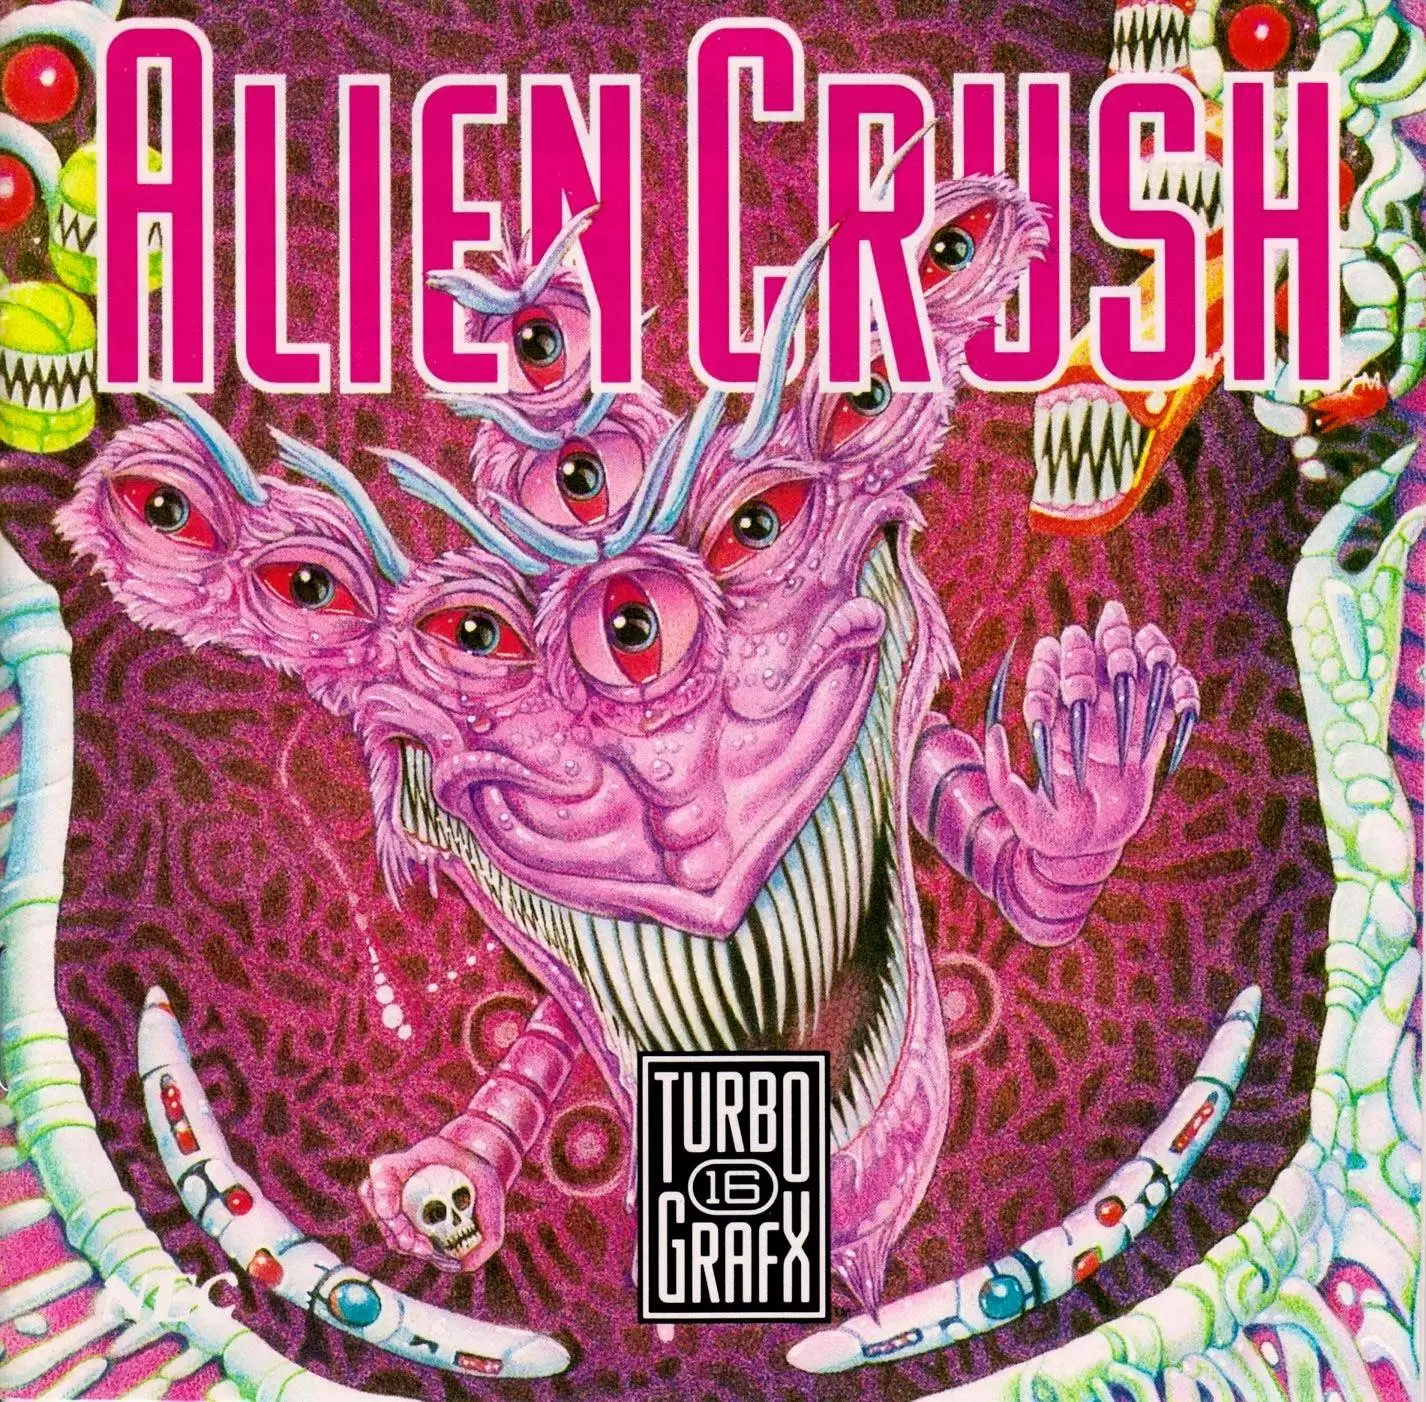 Turbo Grafx 16 (PC Engine) - Alien Crush